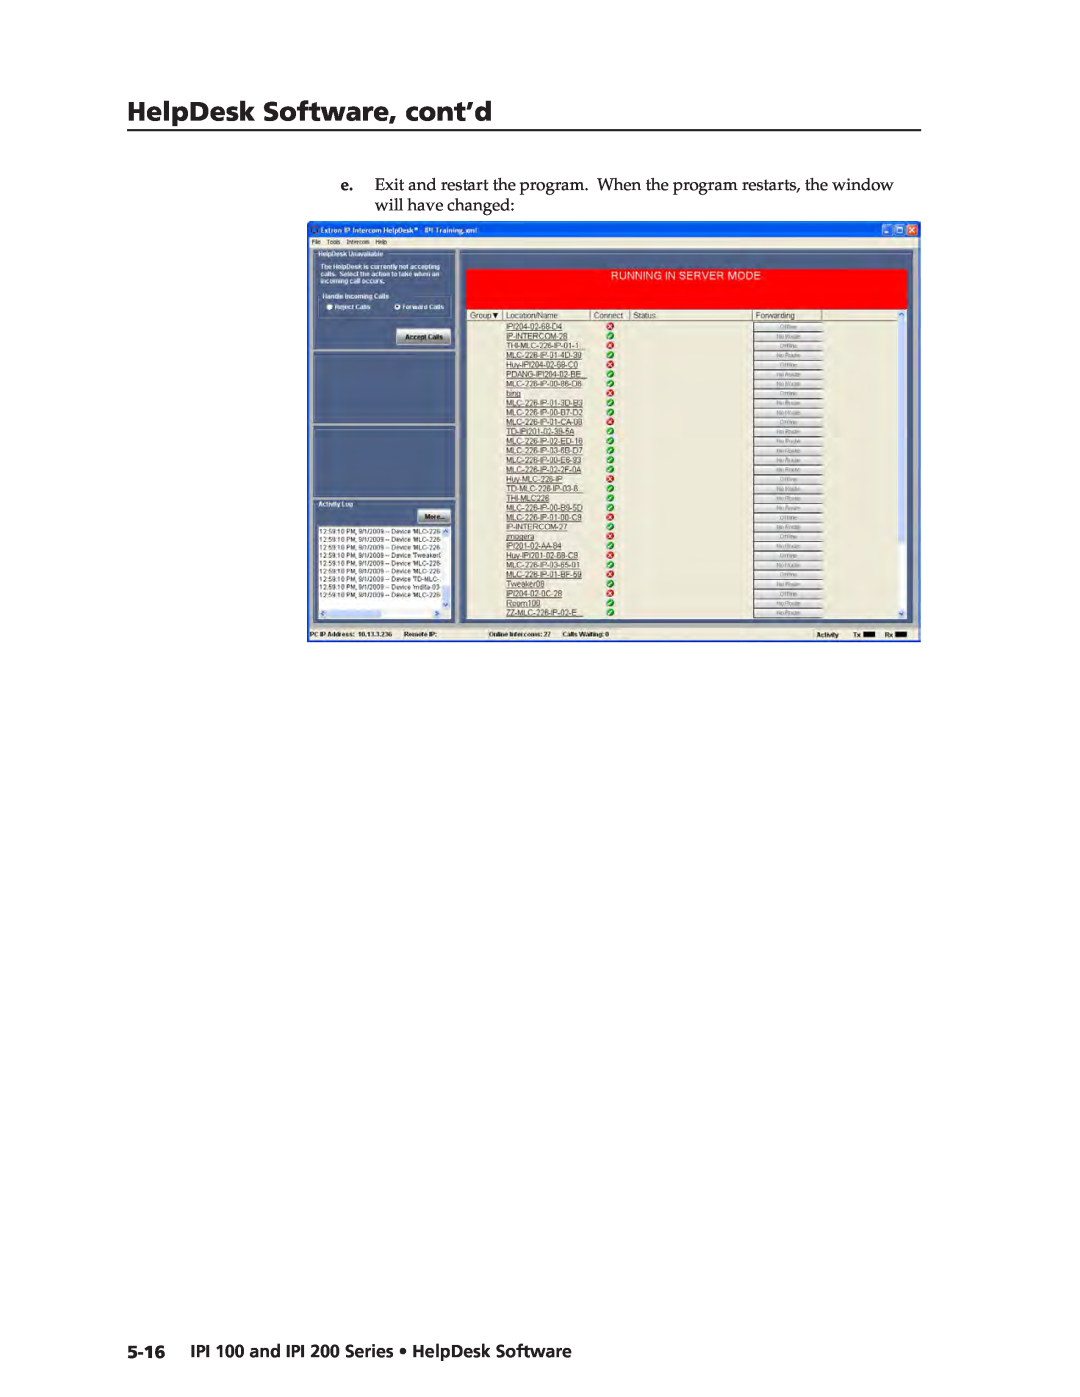 Extron electronic manual HelpDesk Software, cont’d, IPI 100 and IPI 200 Series HelpDesk Software 